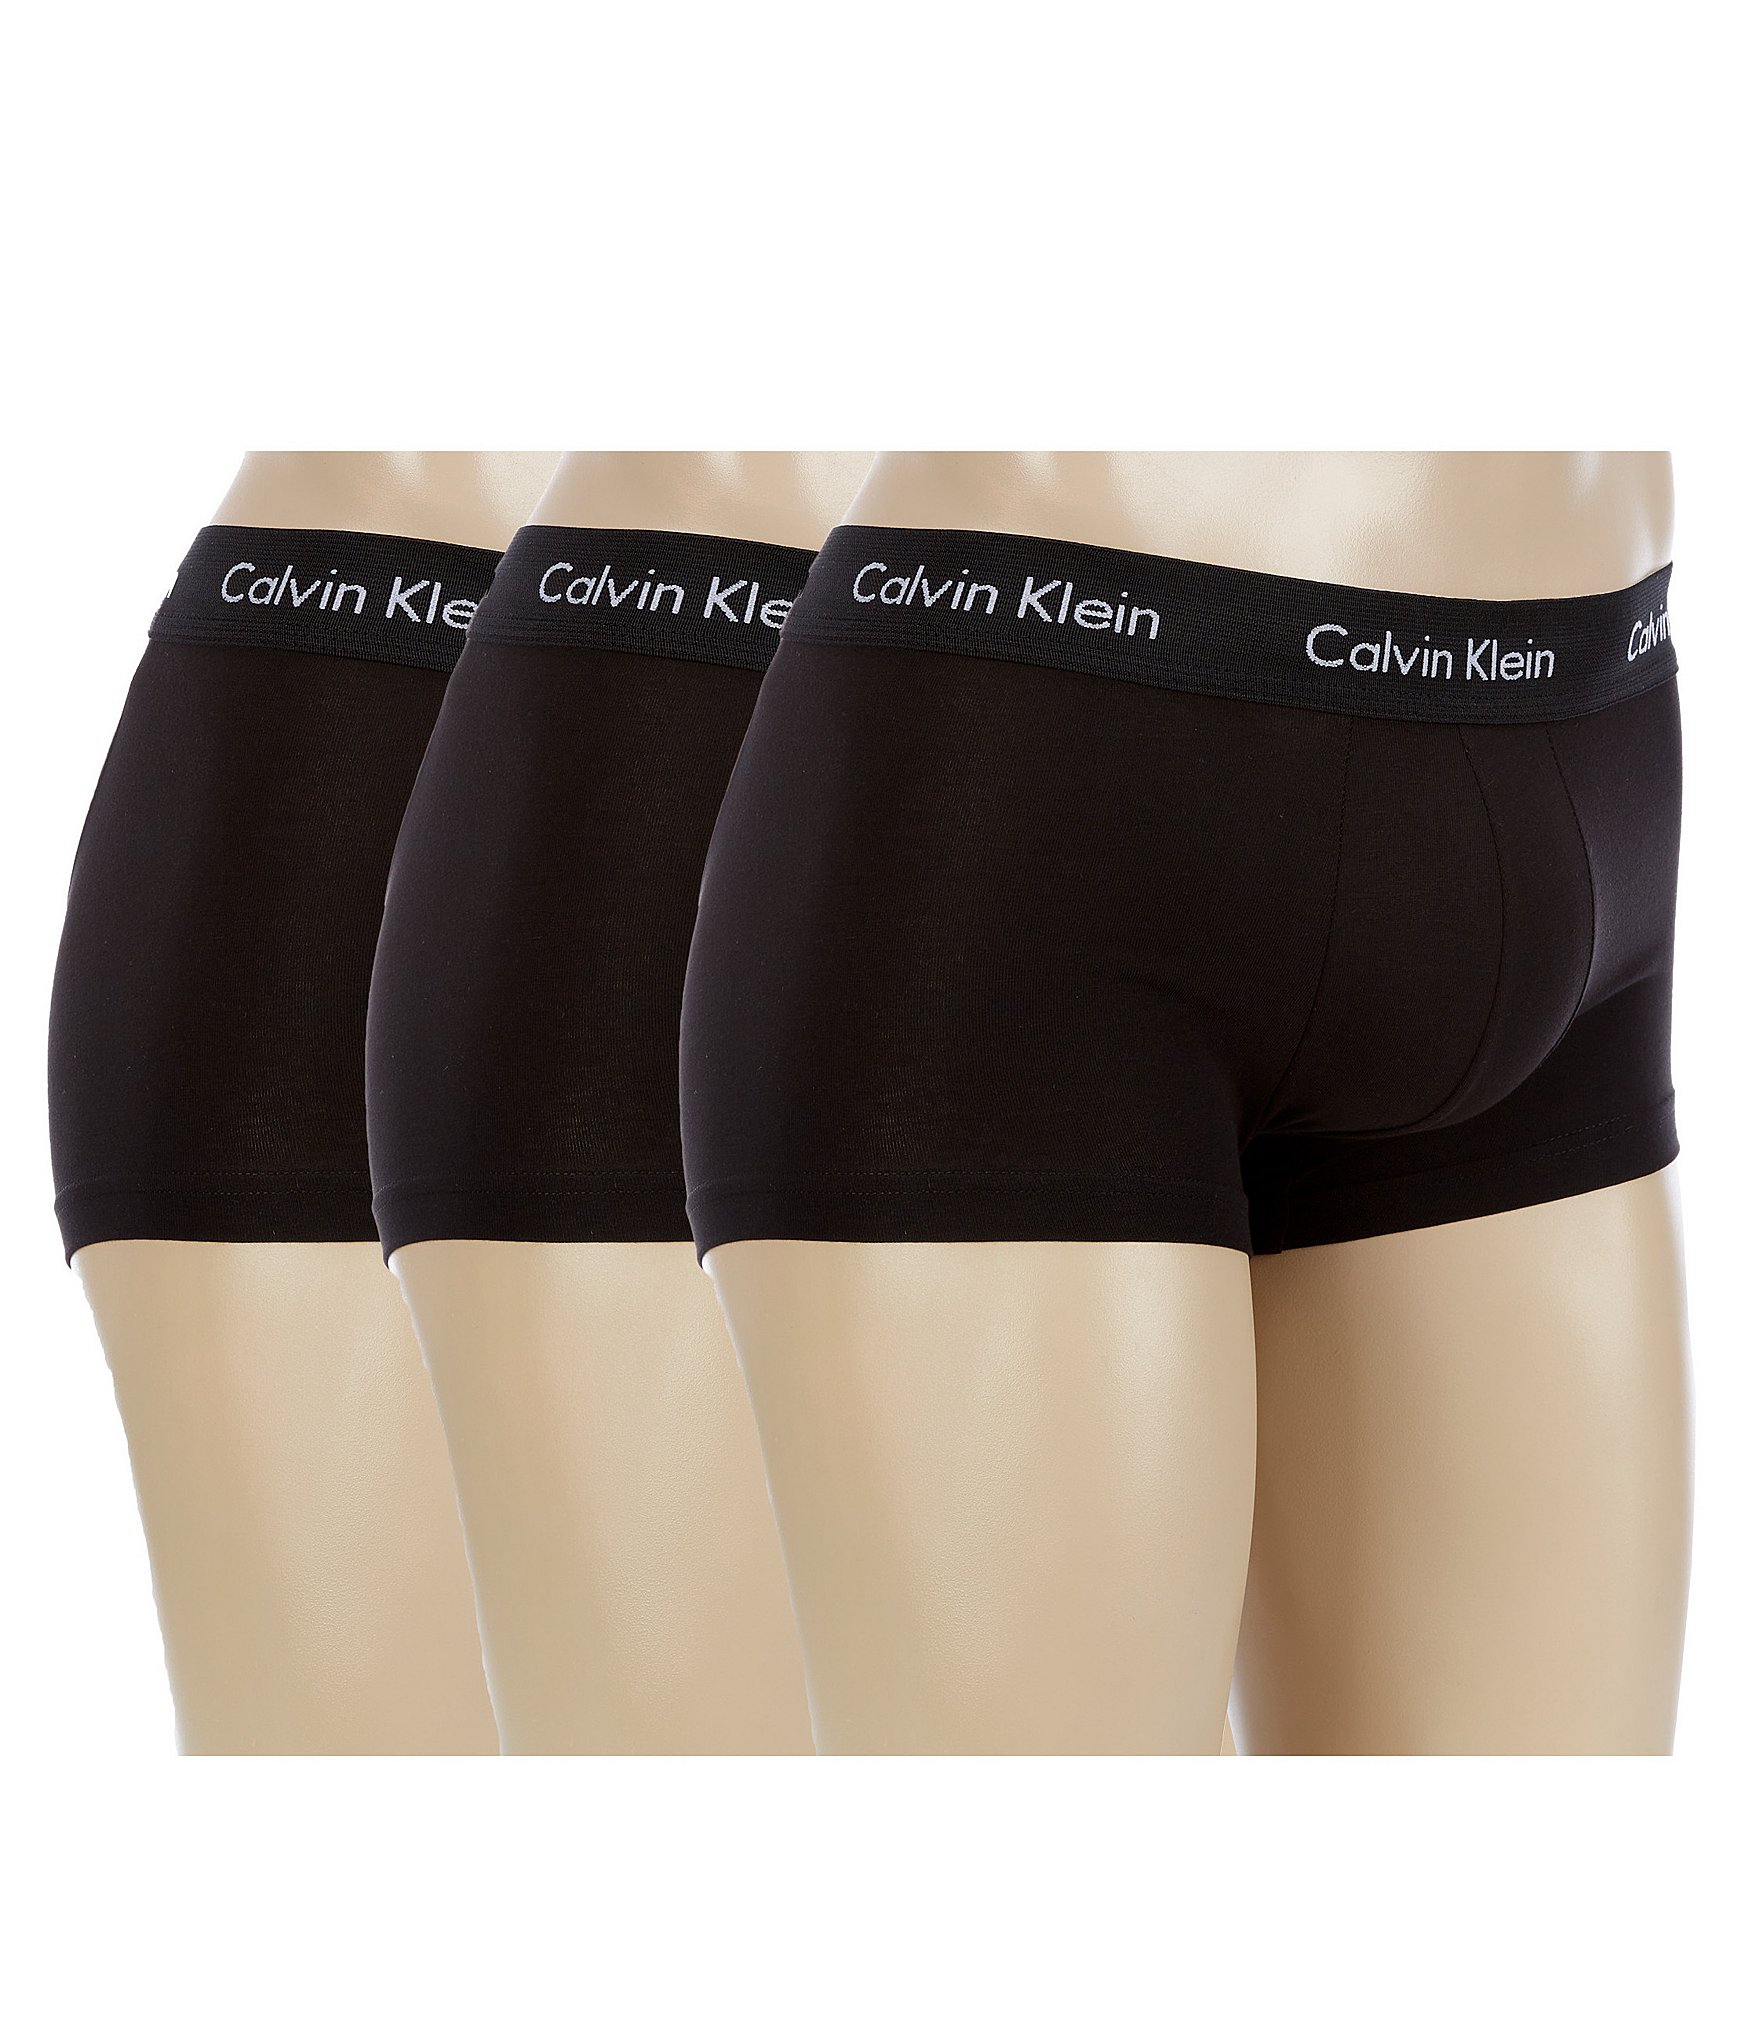 Calvin Klein Underwear Men's Low Rise Trunks 3 Pack, Olive/Gentle